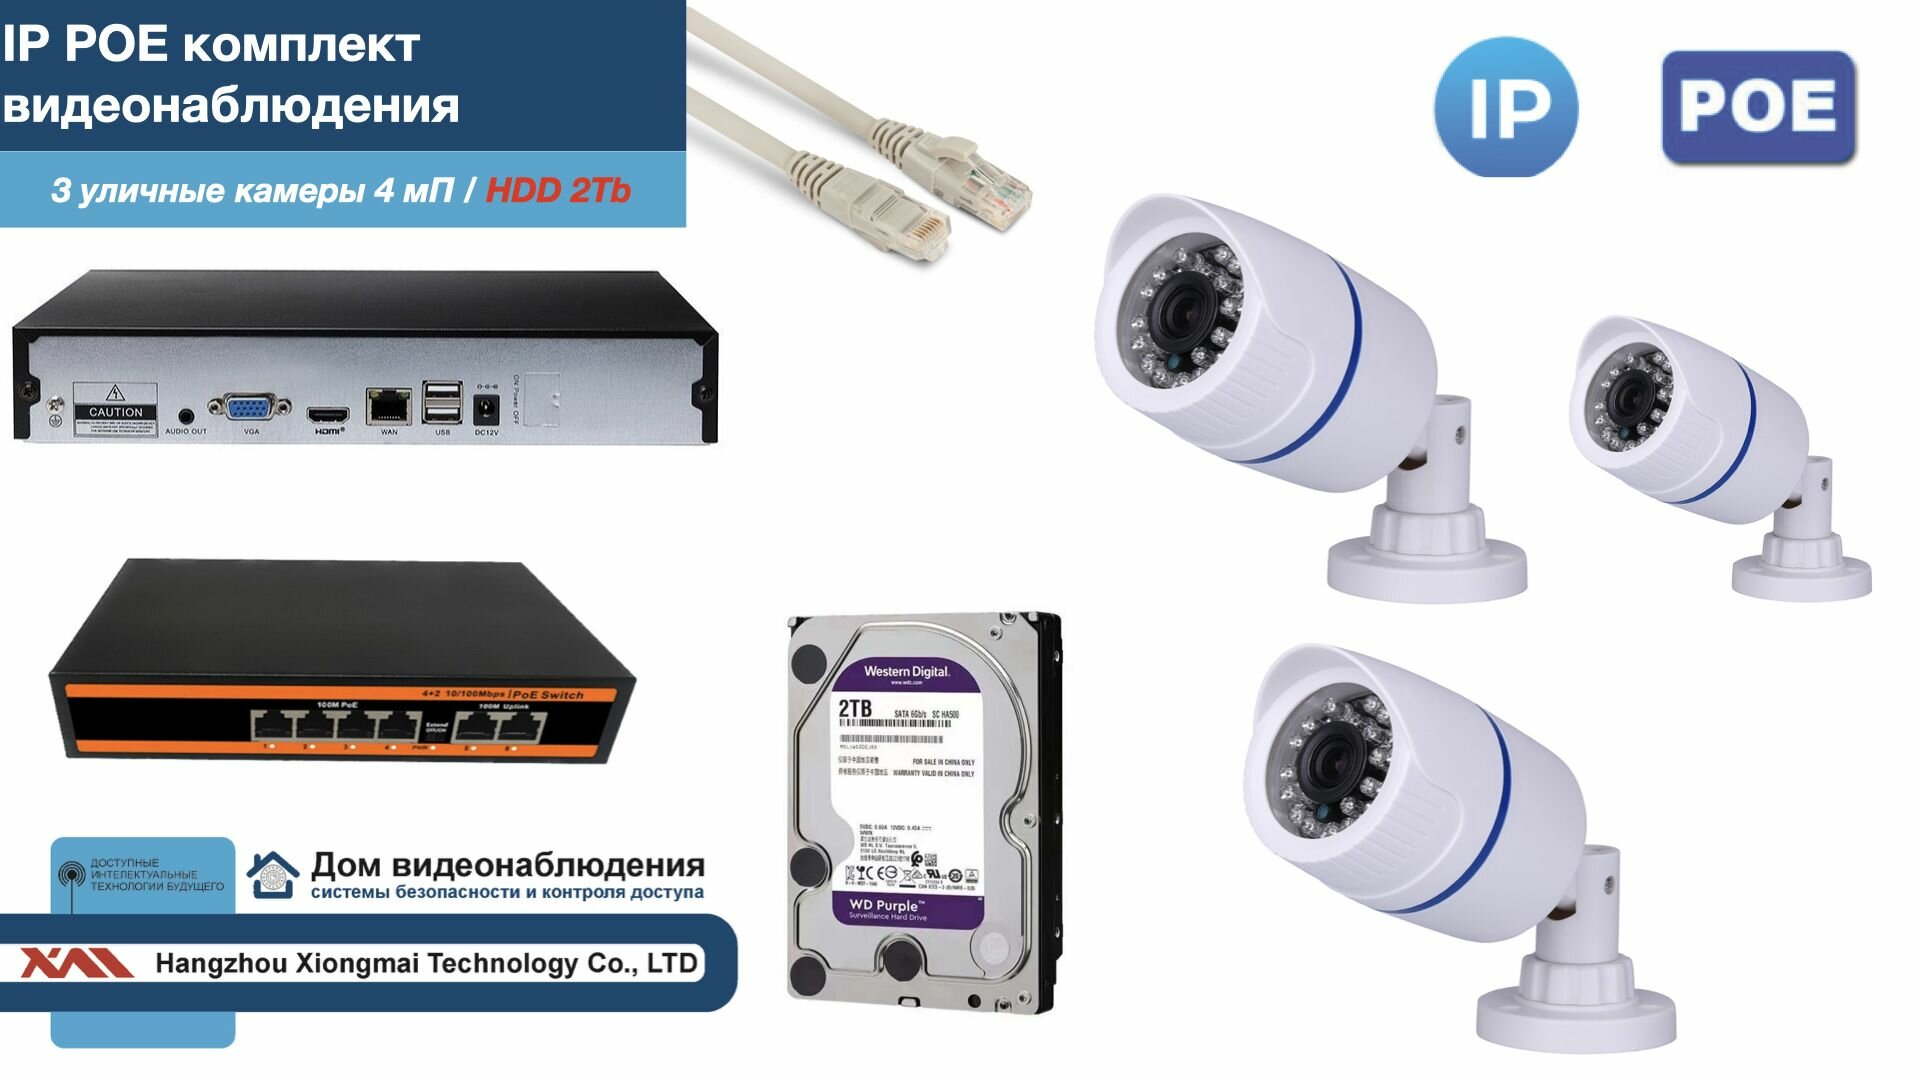 Полный IP POE комплект видеонаблюдения на 3 камеры (KIT3IPPOE100W4MP-HDD2Tb)